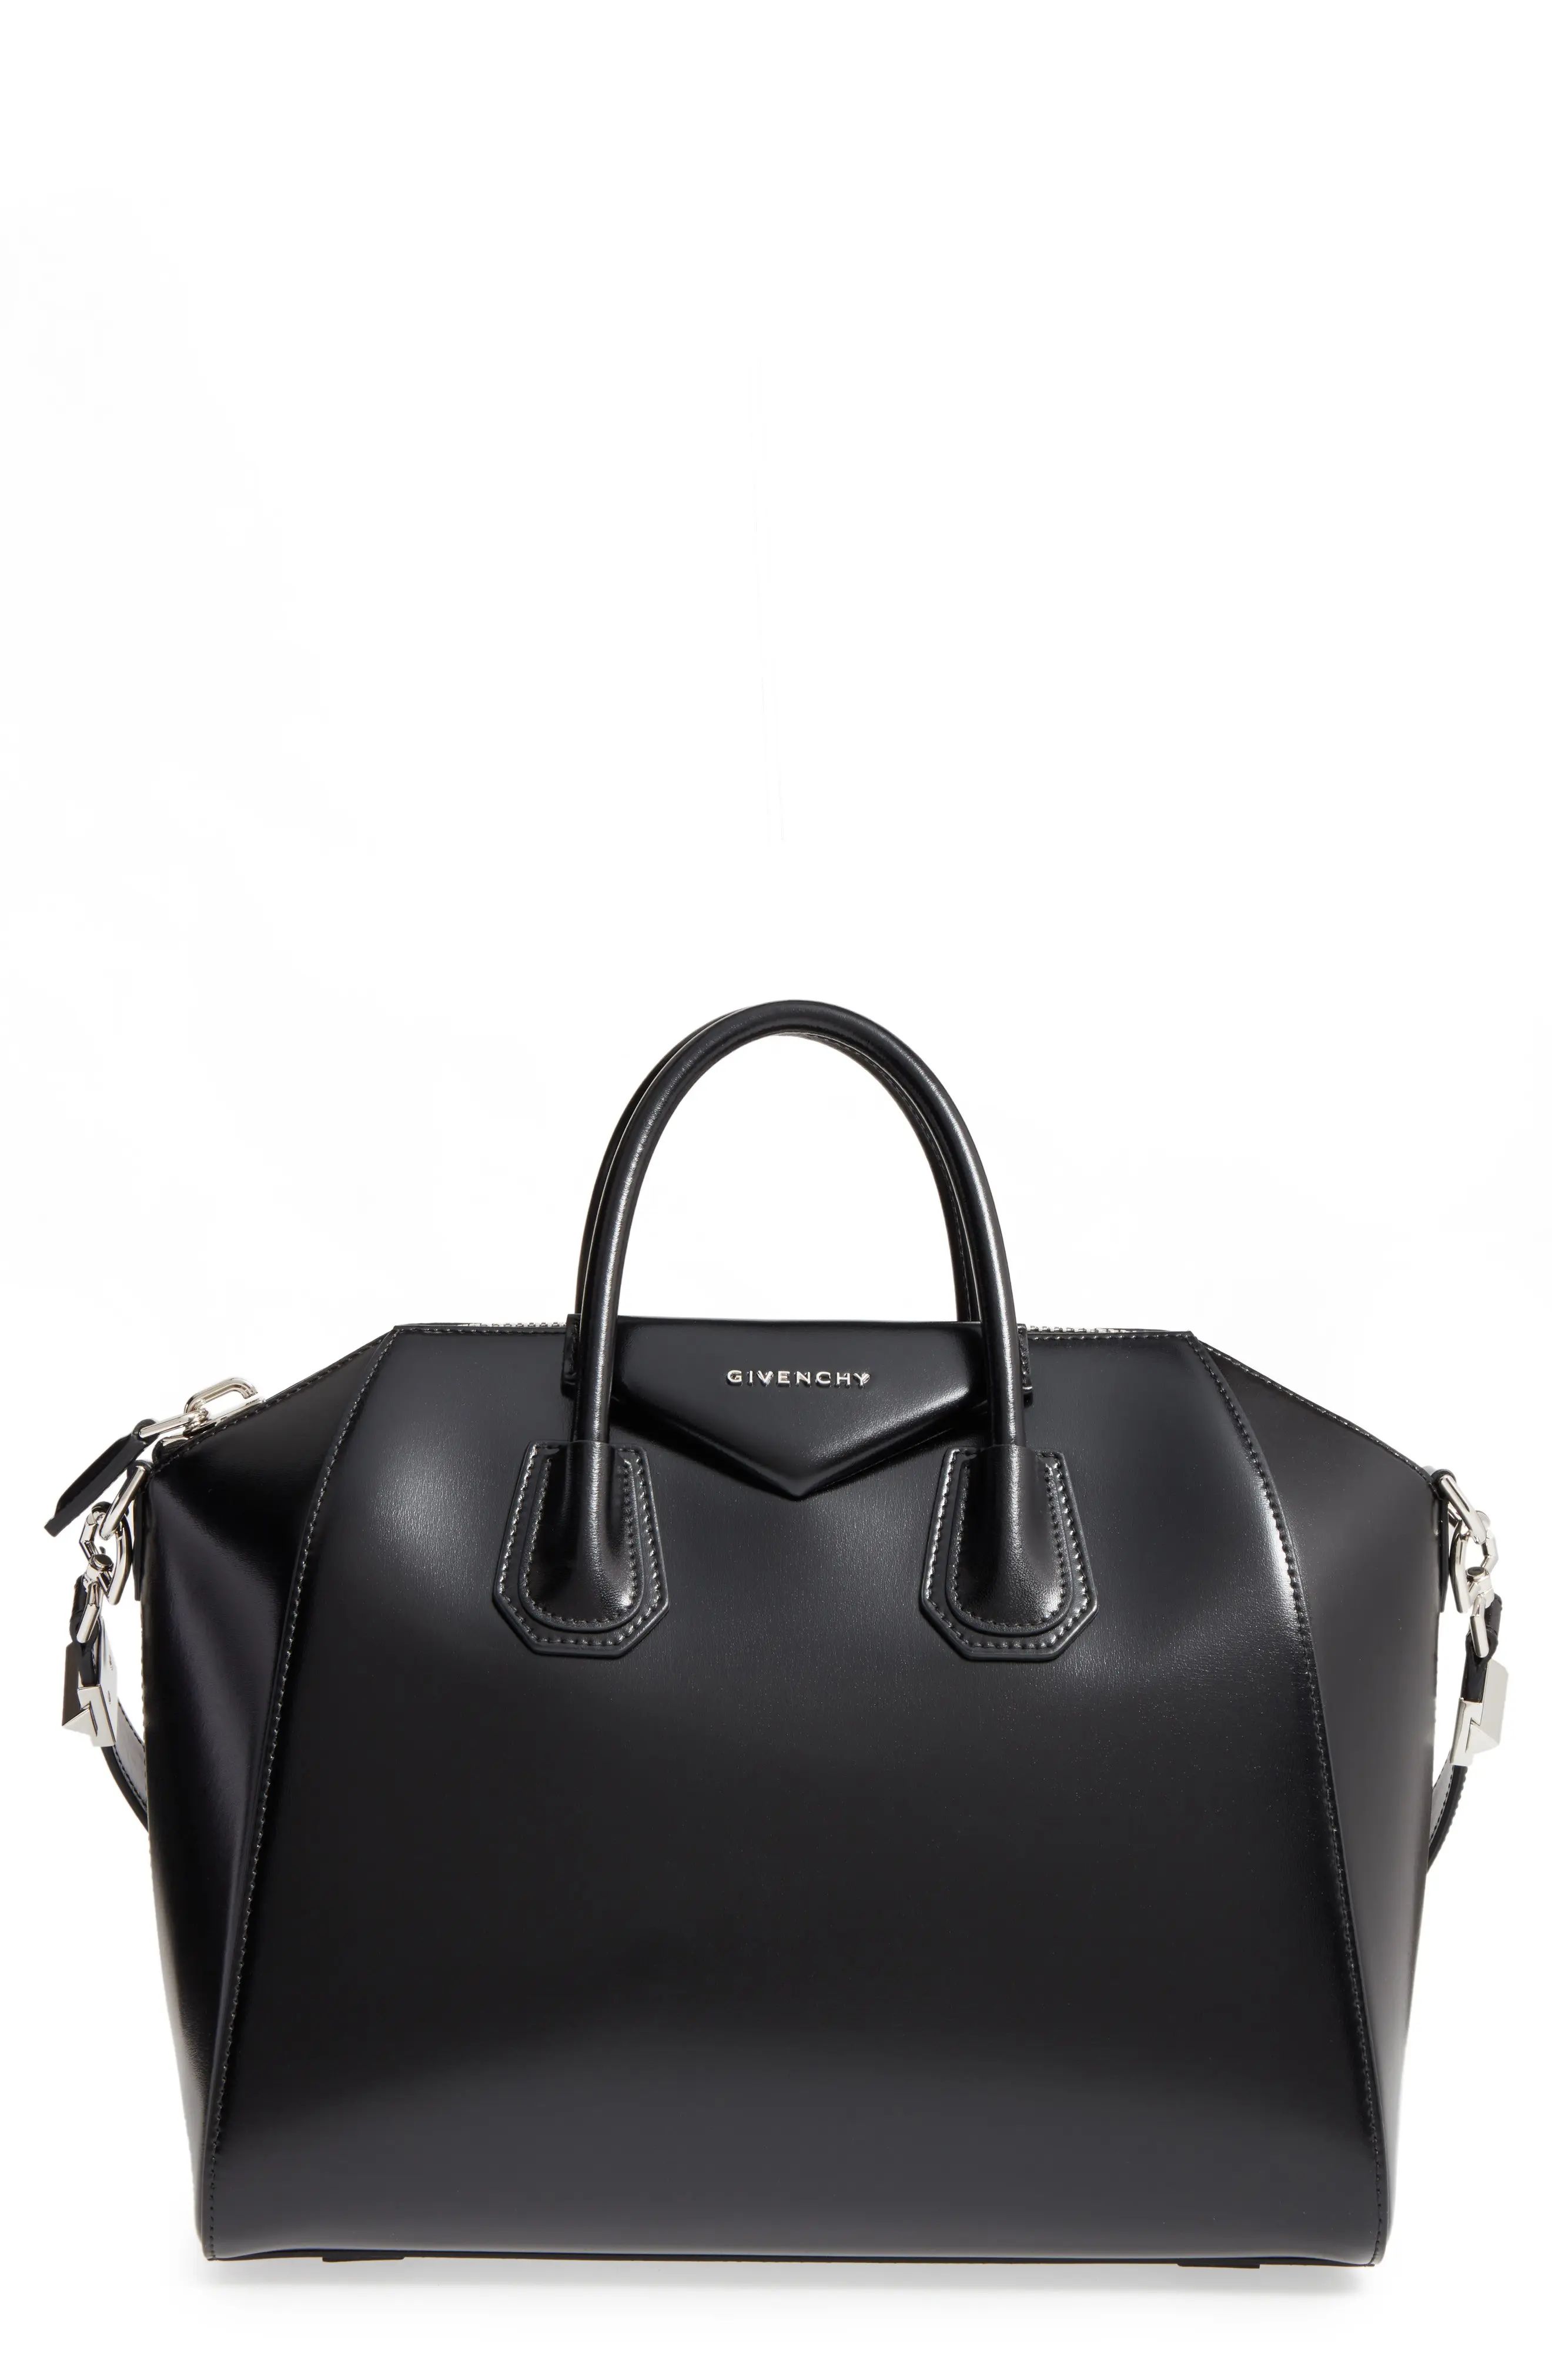 Givenchy Medium Antigona Box Leather Satchel | Nordstrom